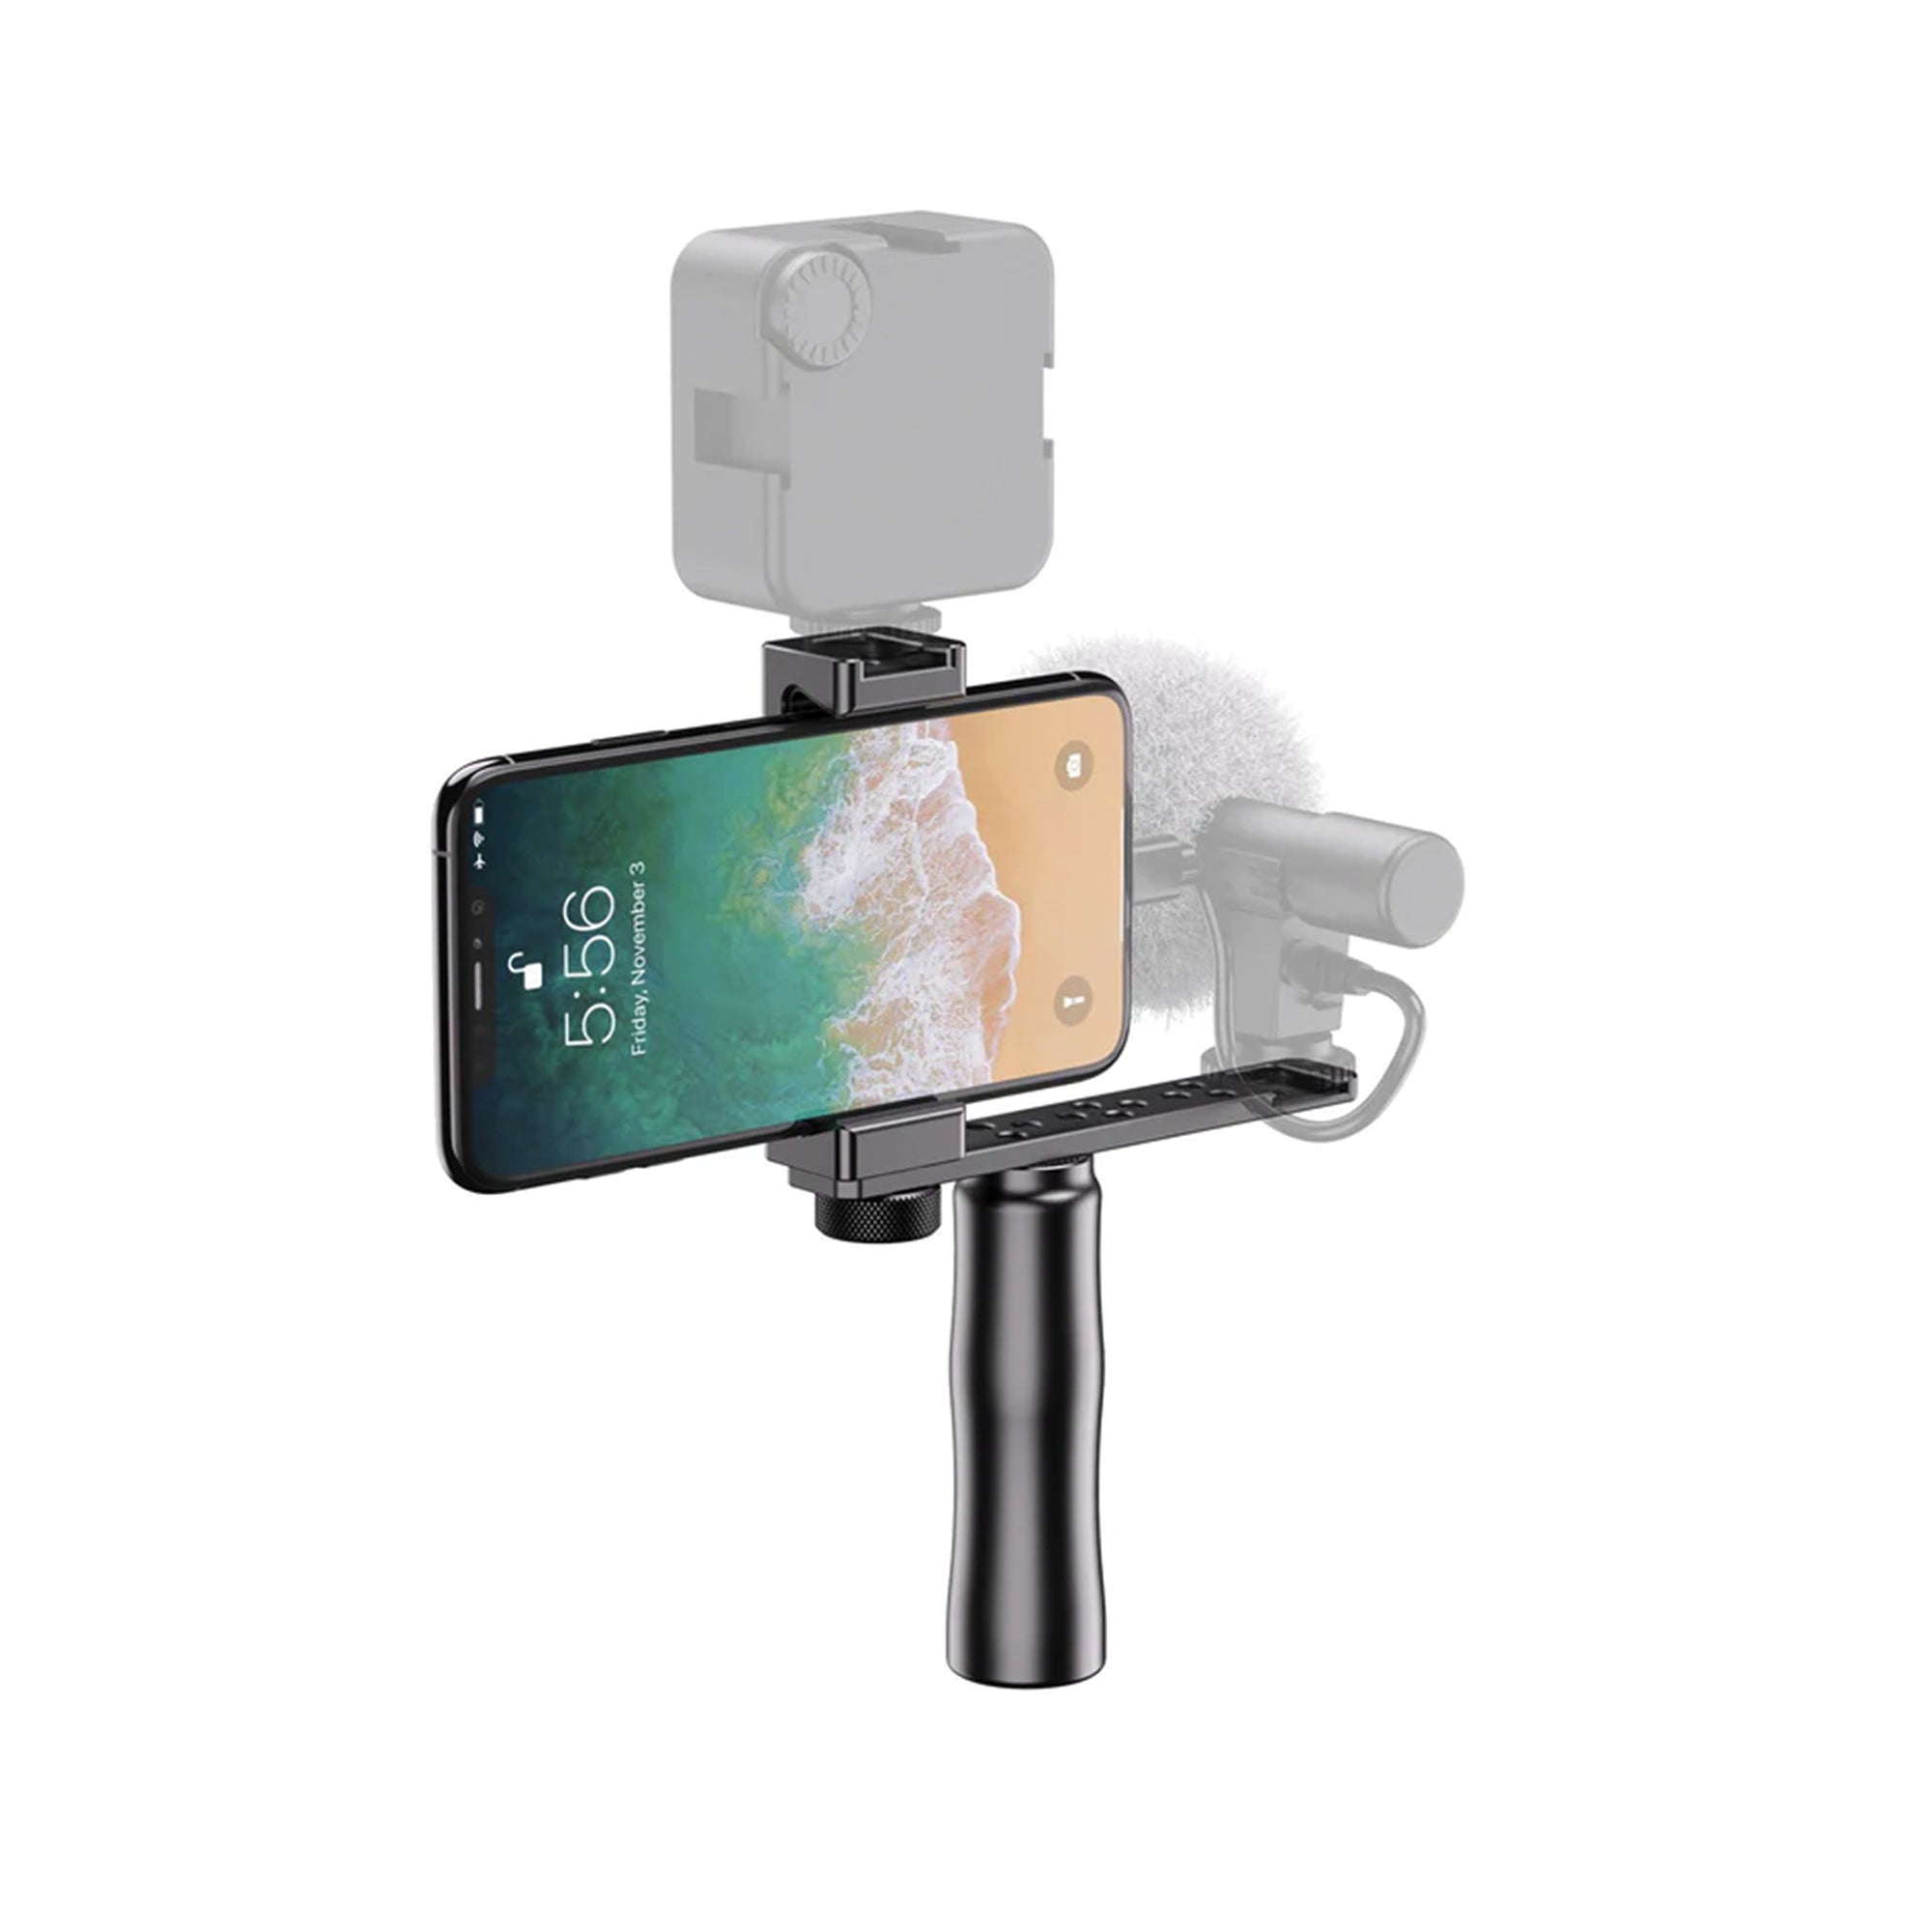 Stabilizator Foto Video tip Rig pentru telefon, Apexel, Multifunctional, Aluminiu, Grip Universal